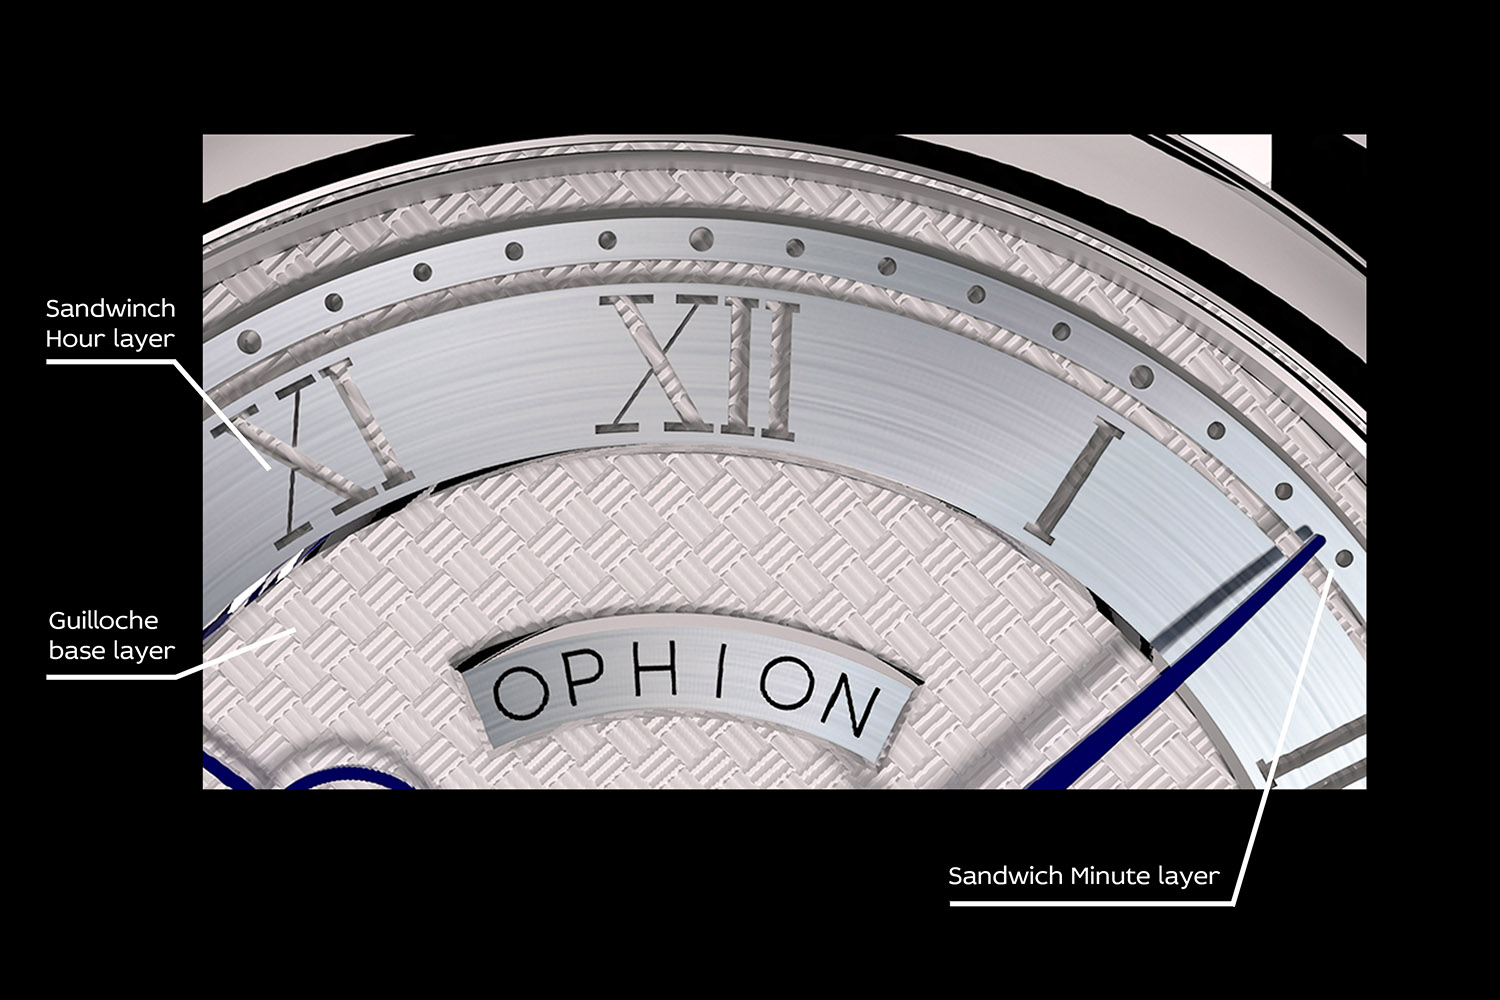 Ophion OPH 786 Watch